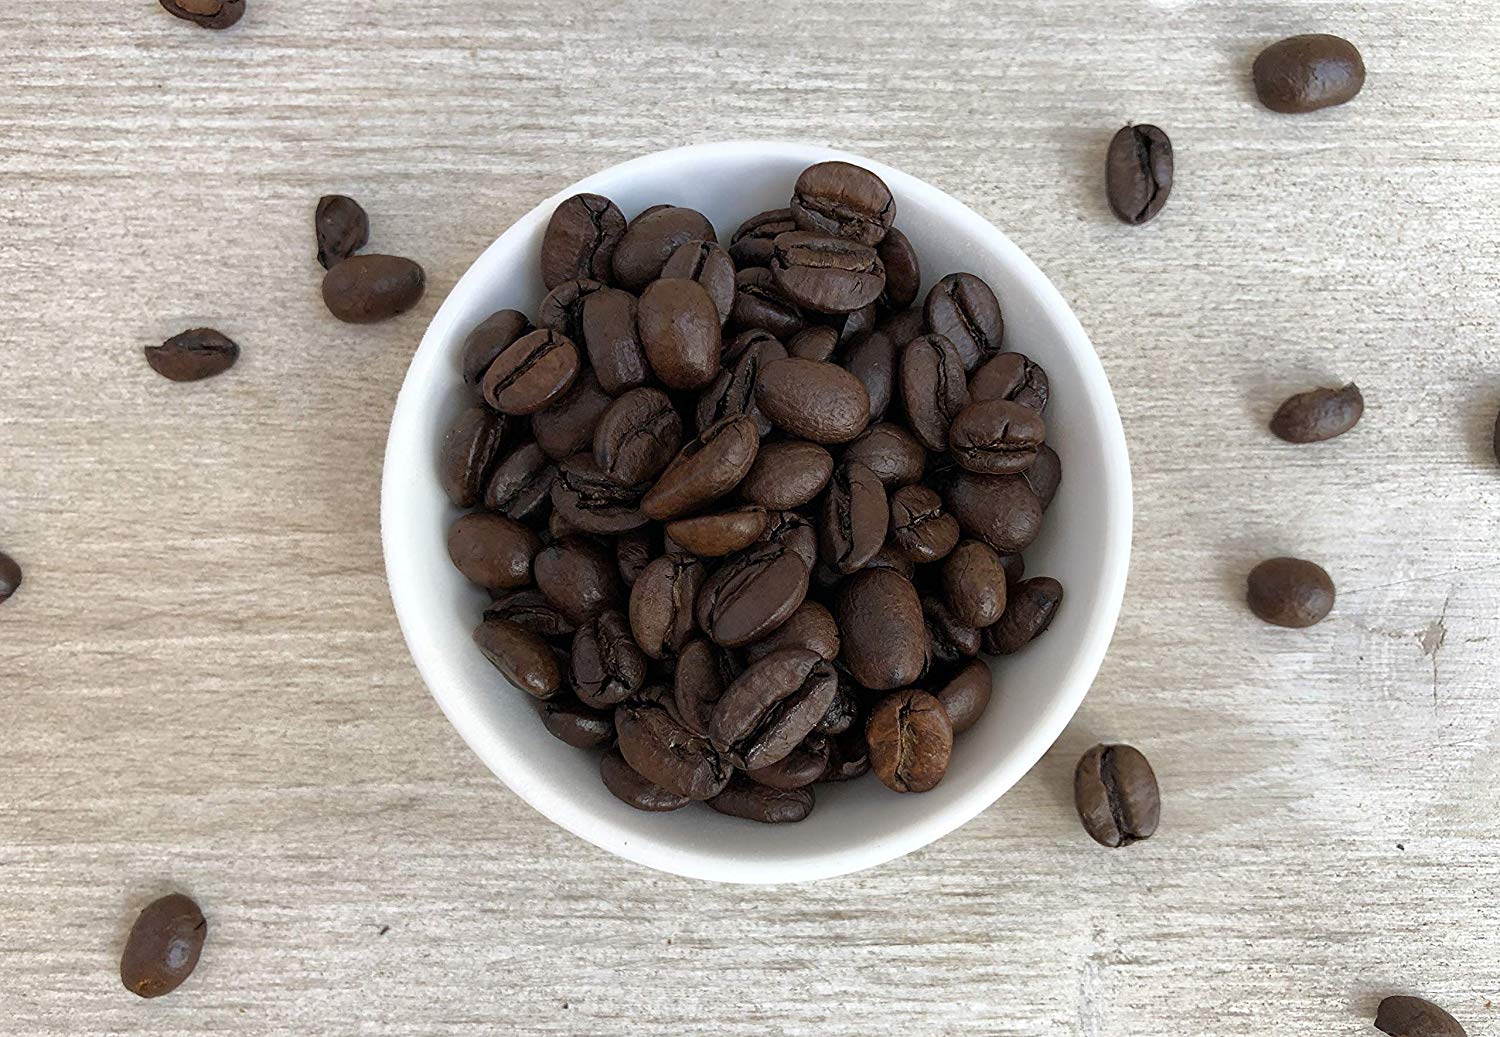 Organic Whole Bean Coffee: Mexican Altura Arabica Beans, Medium Roast, Batch Tested Gluten Free